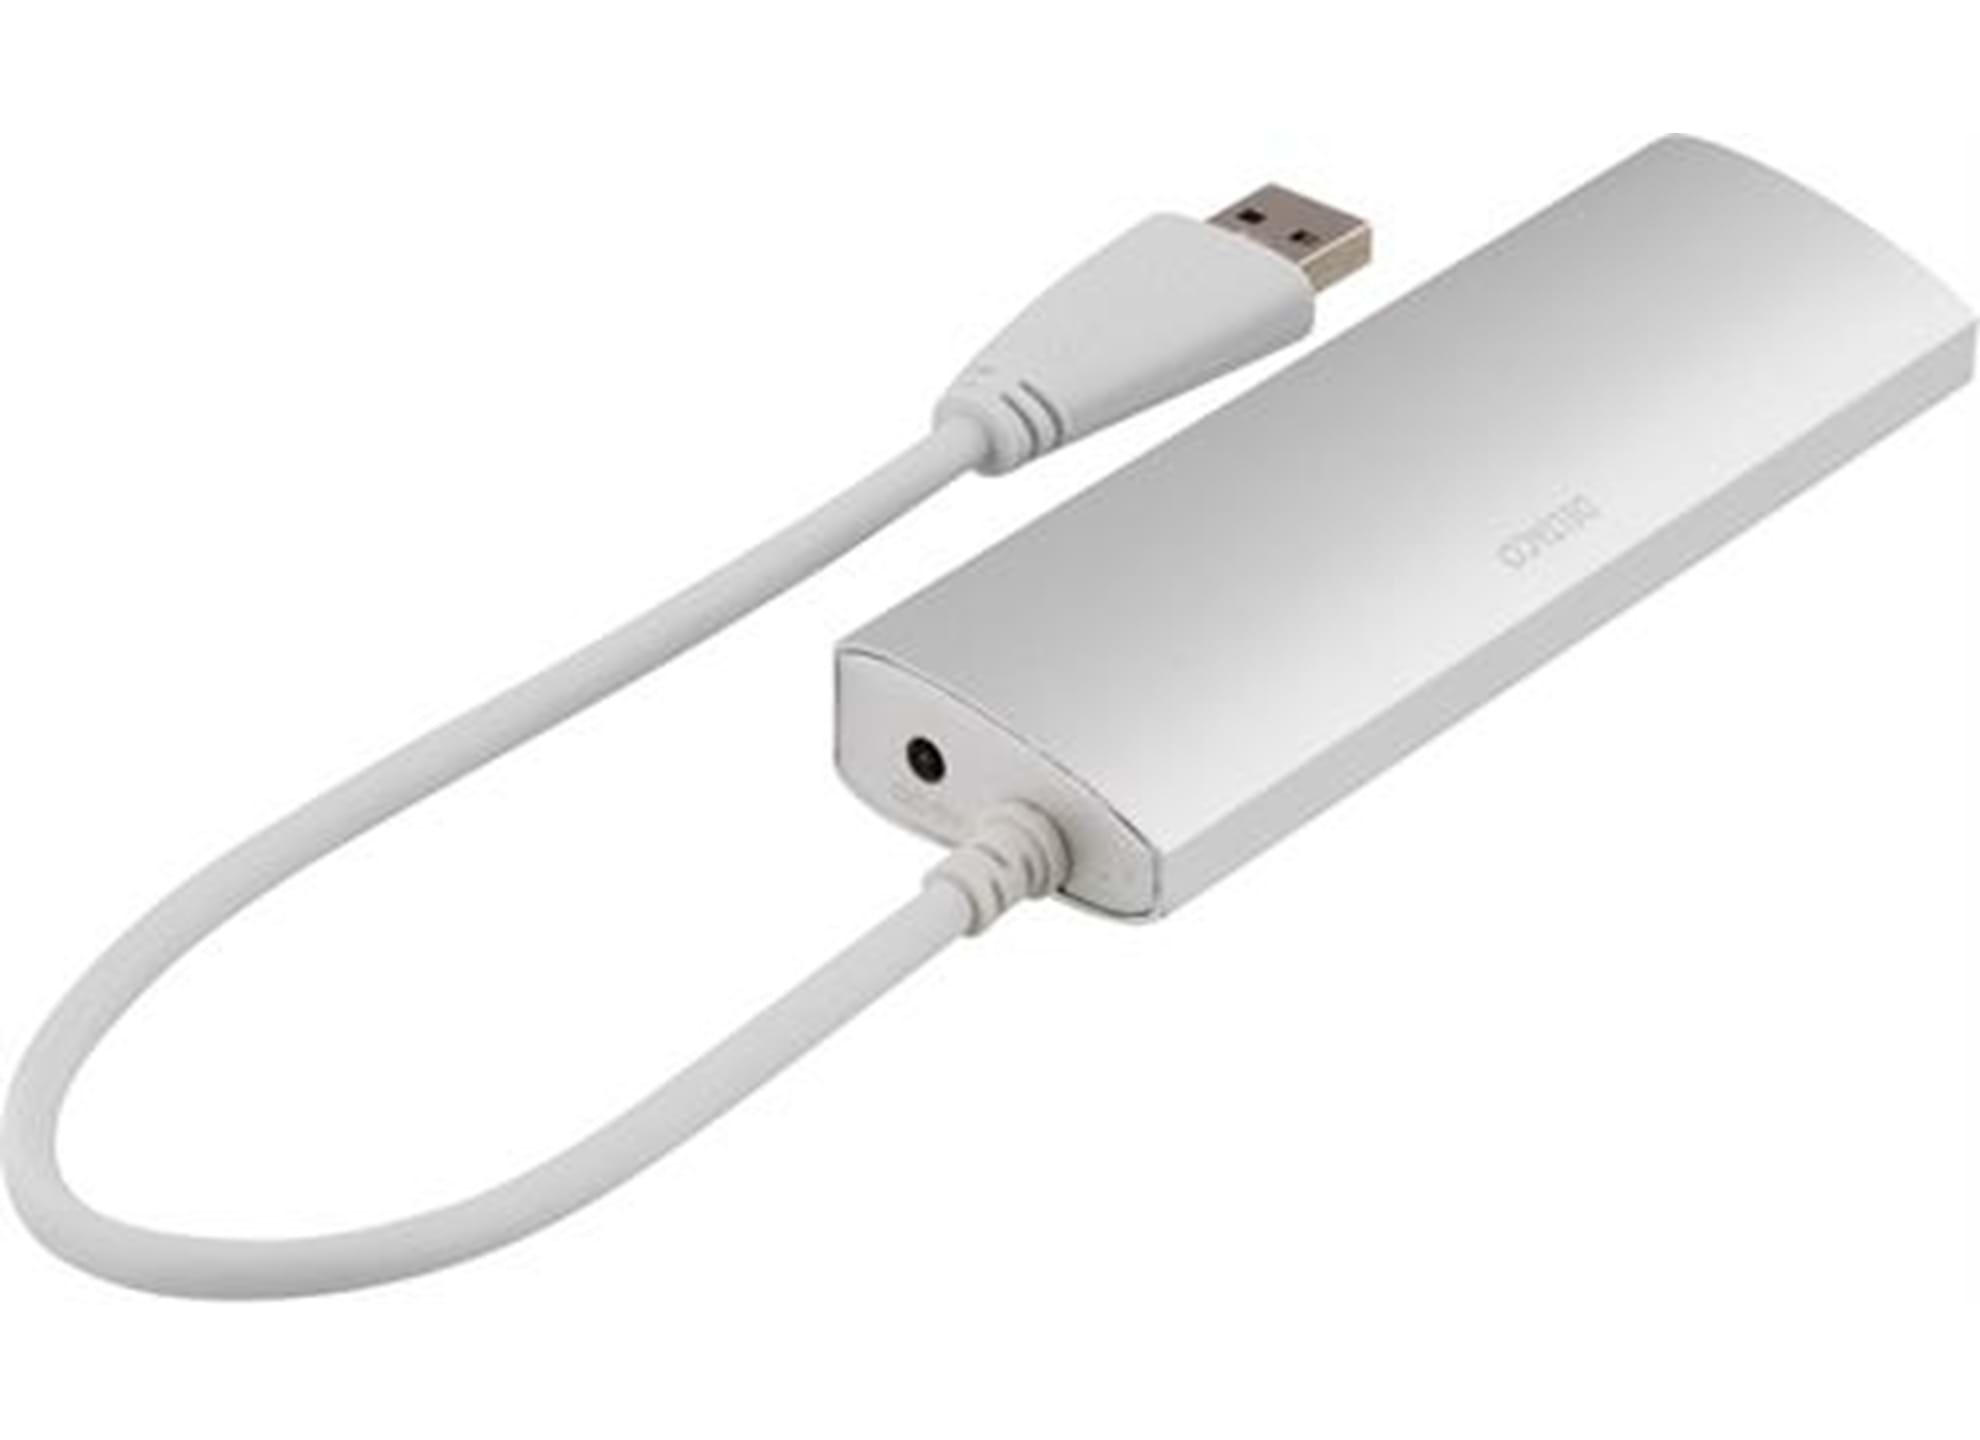 4-port USB 3.1 Hub Silver